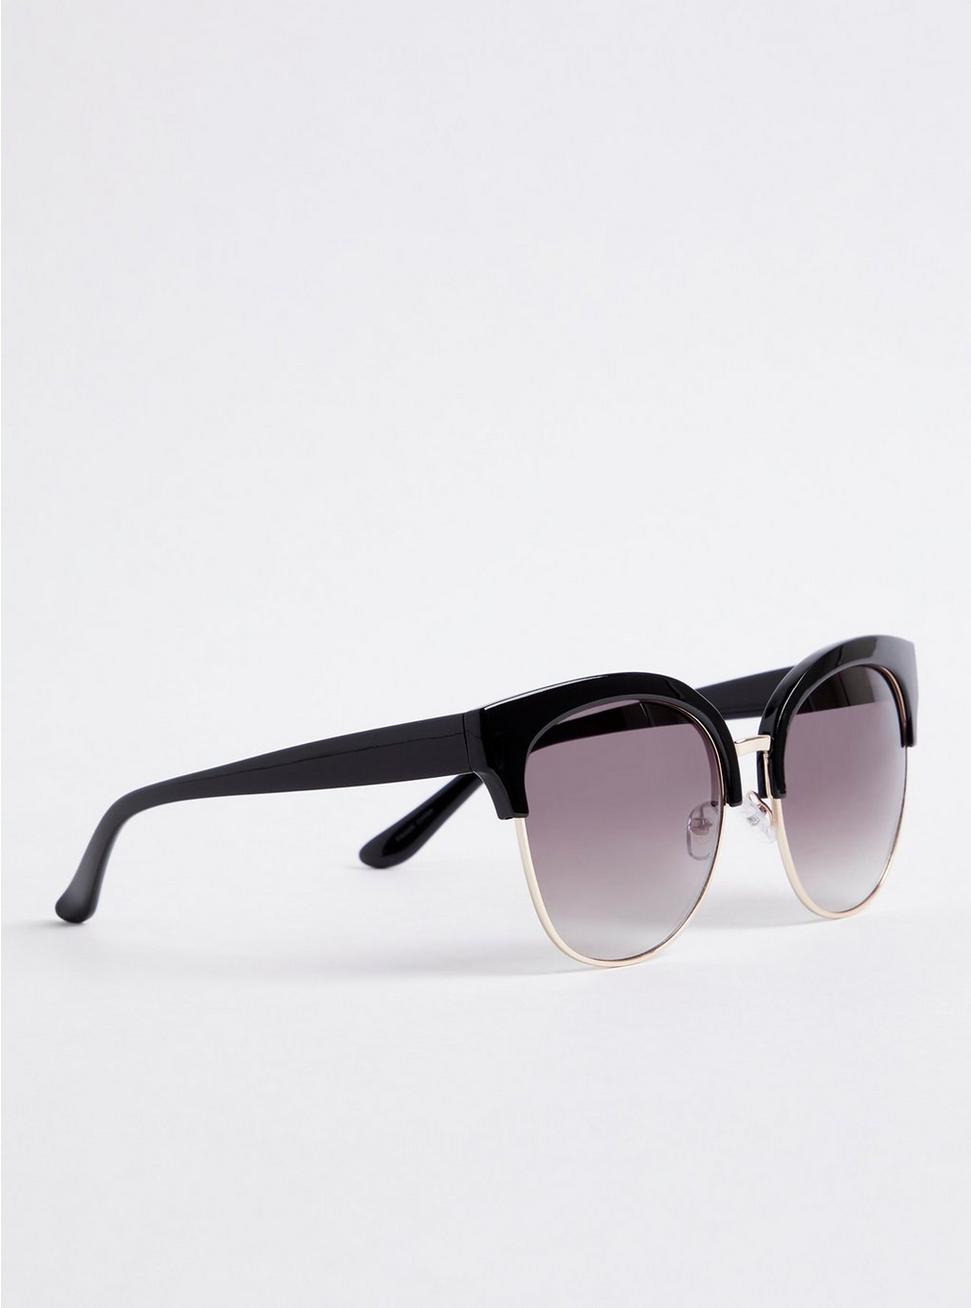 Retro Cat Eye Sunglasses - Black & Gold Tone, , alternate